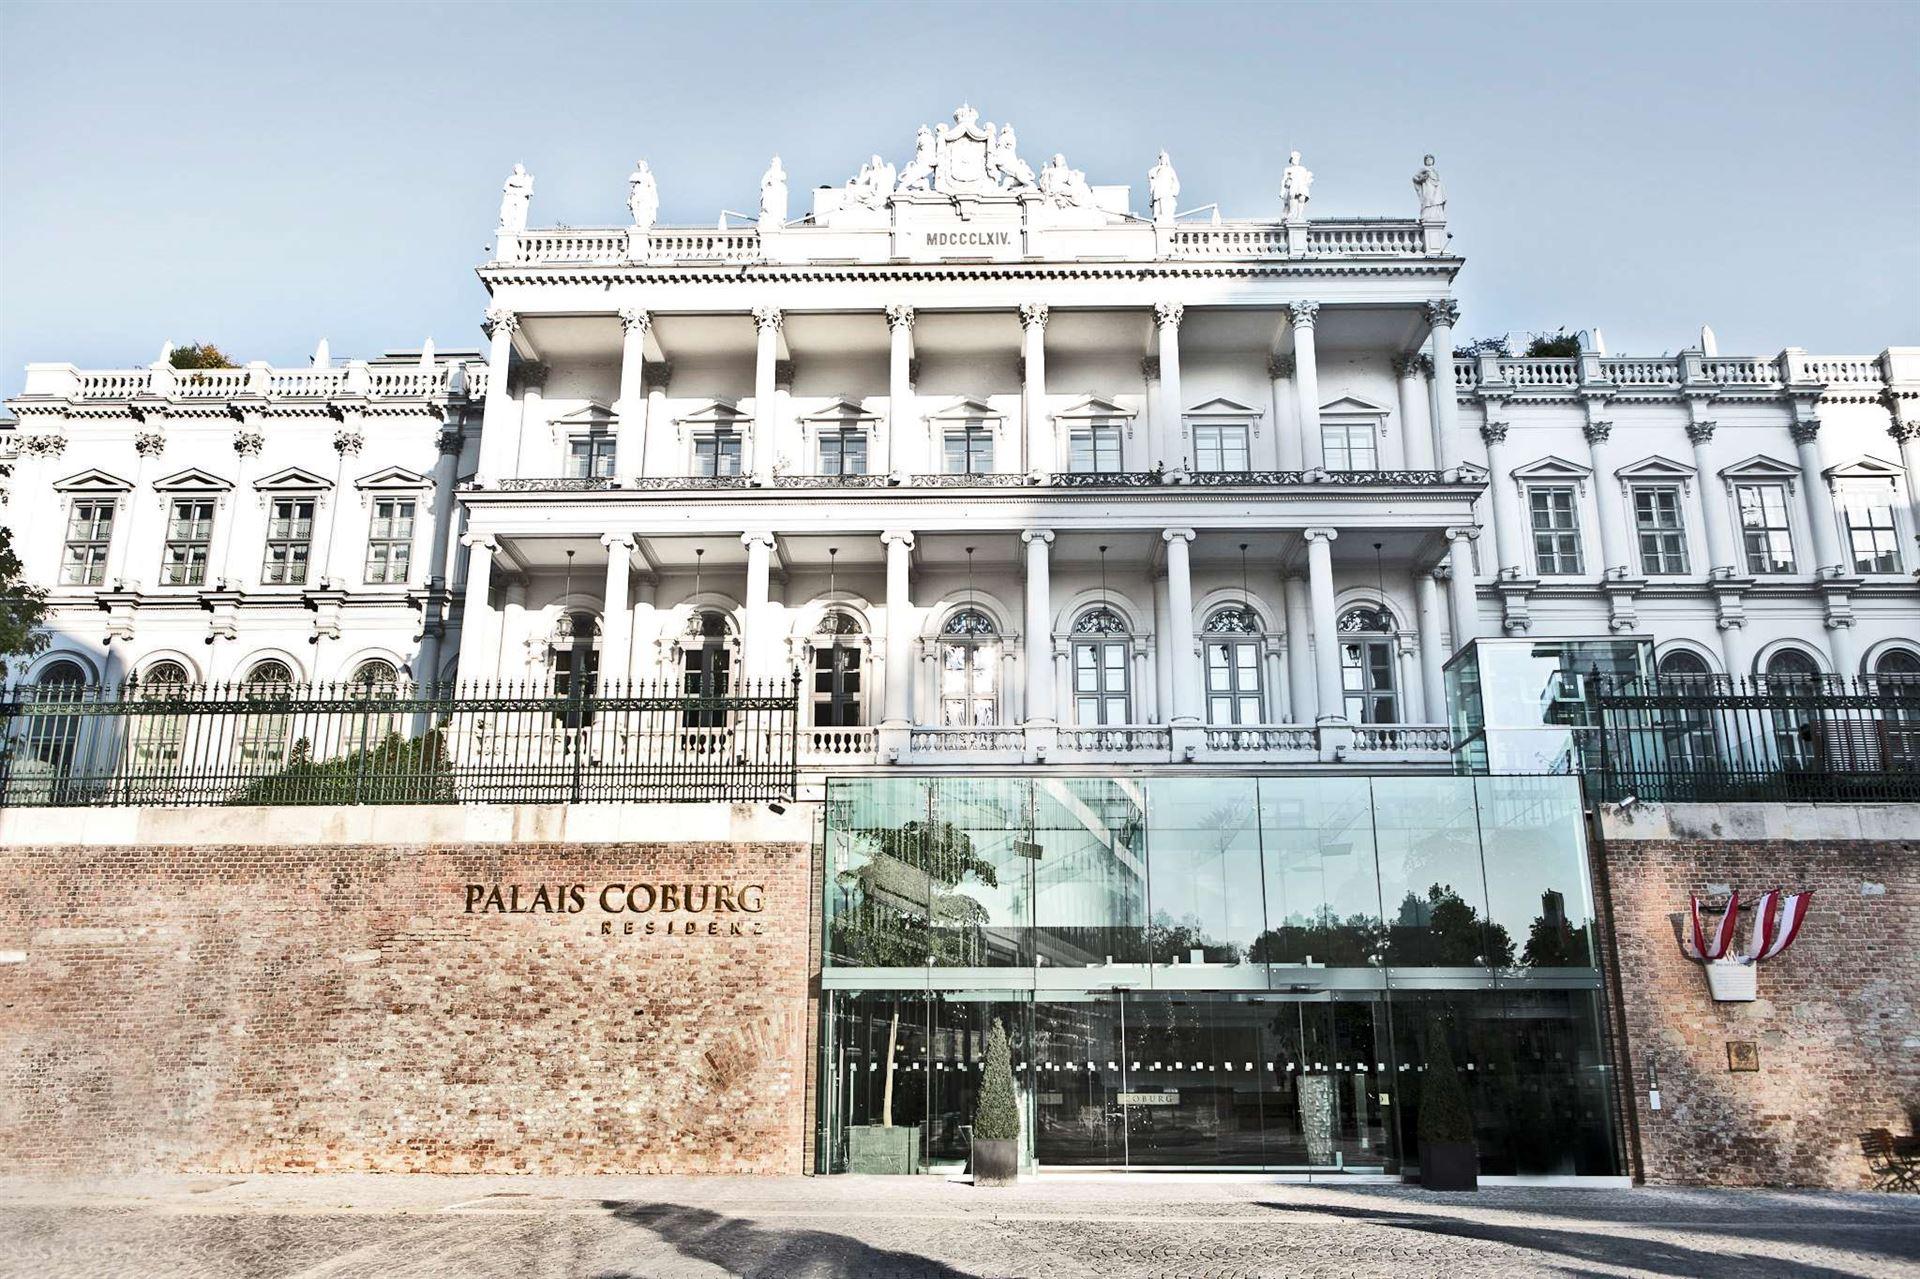 Palais Coburg Residenz luxe hotel deals